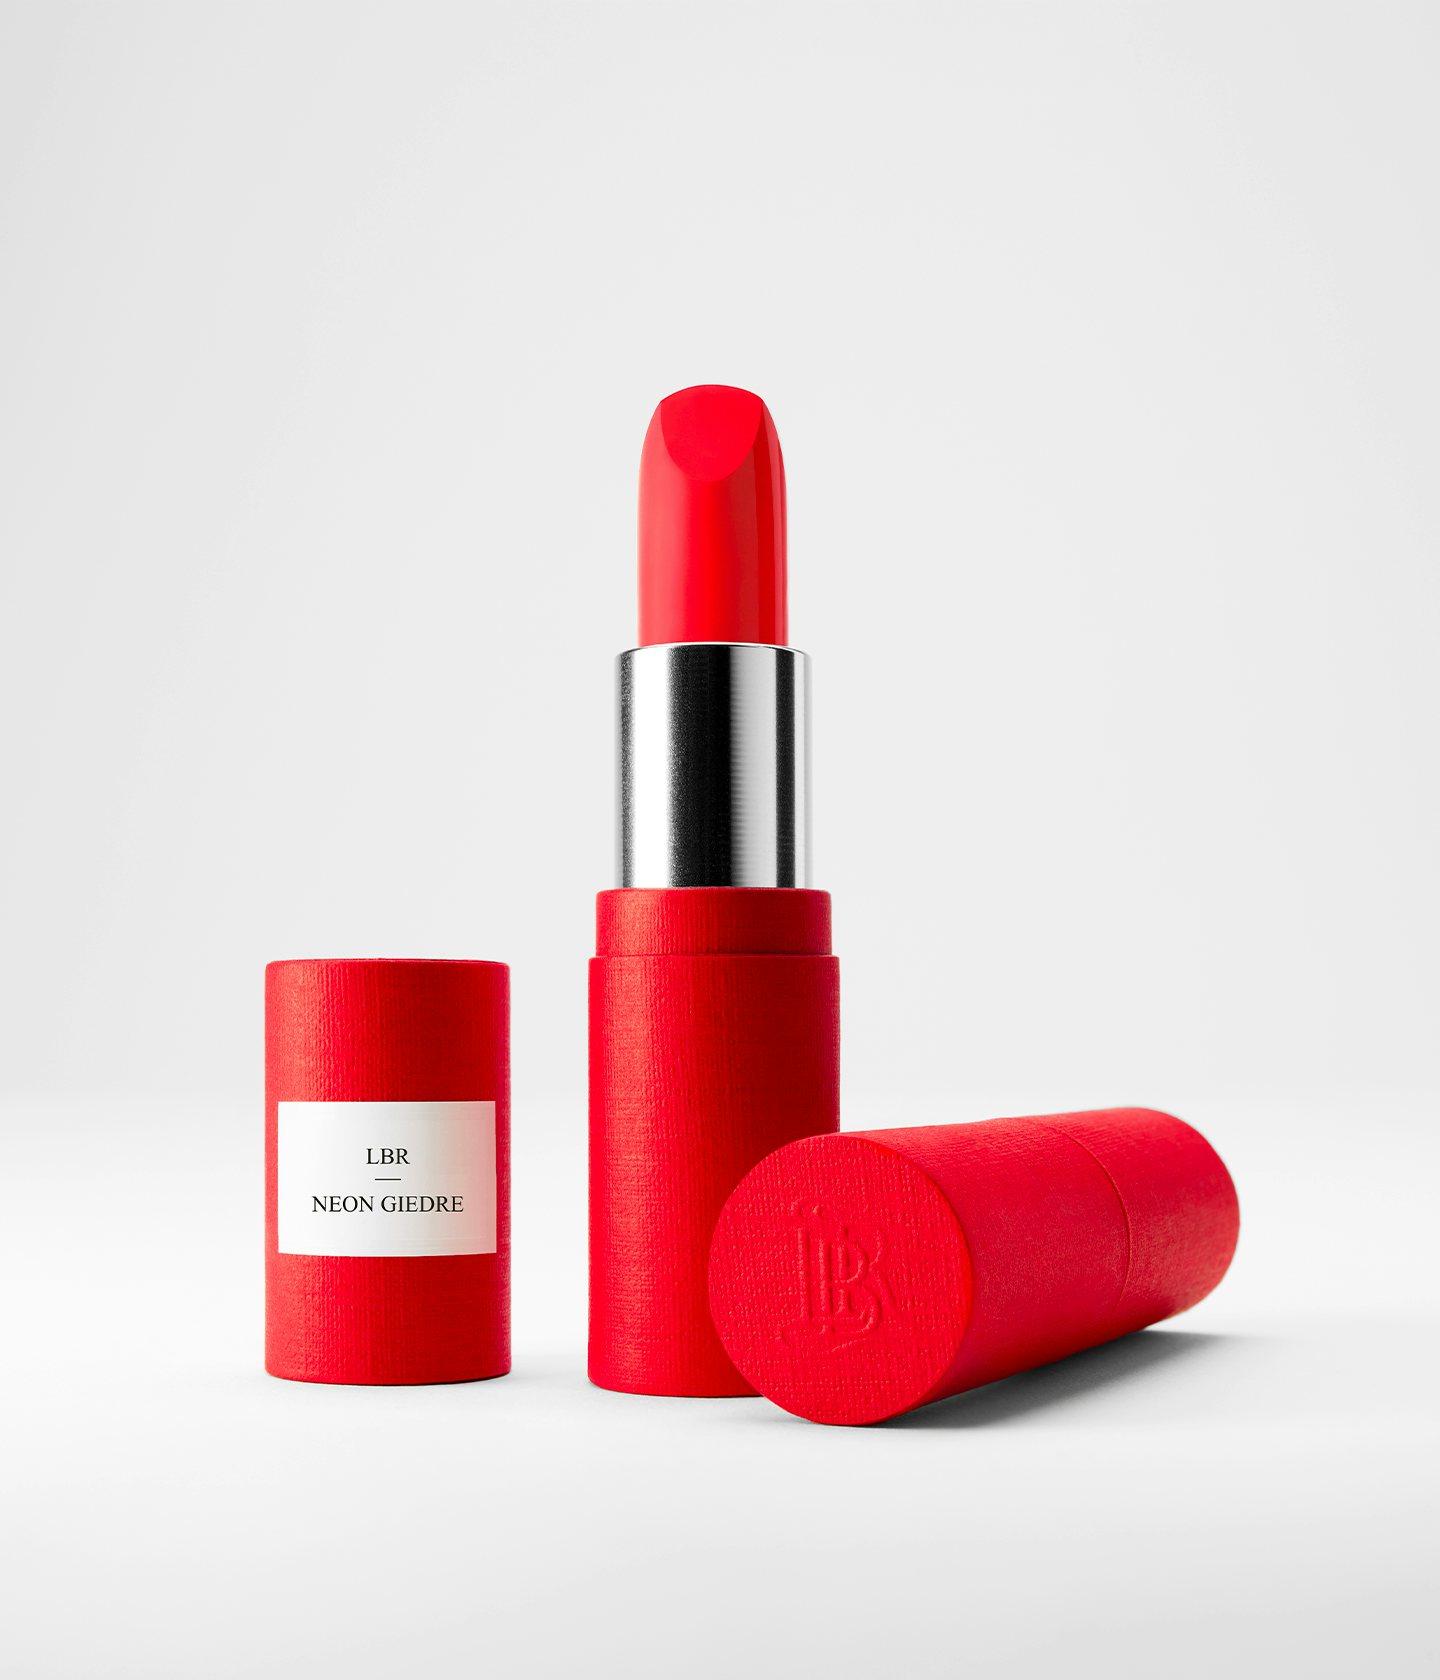 La bouche rouge Neon Giedre lipstick in the red paper case